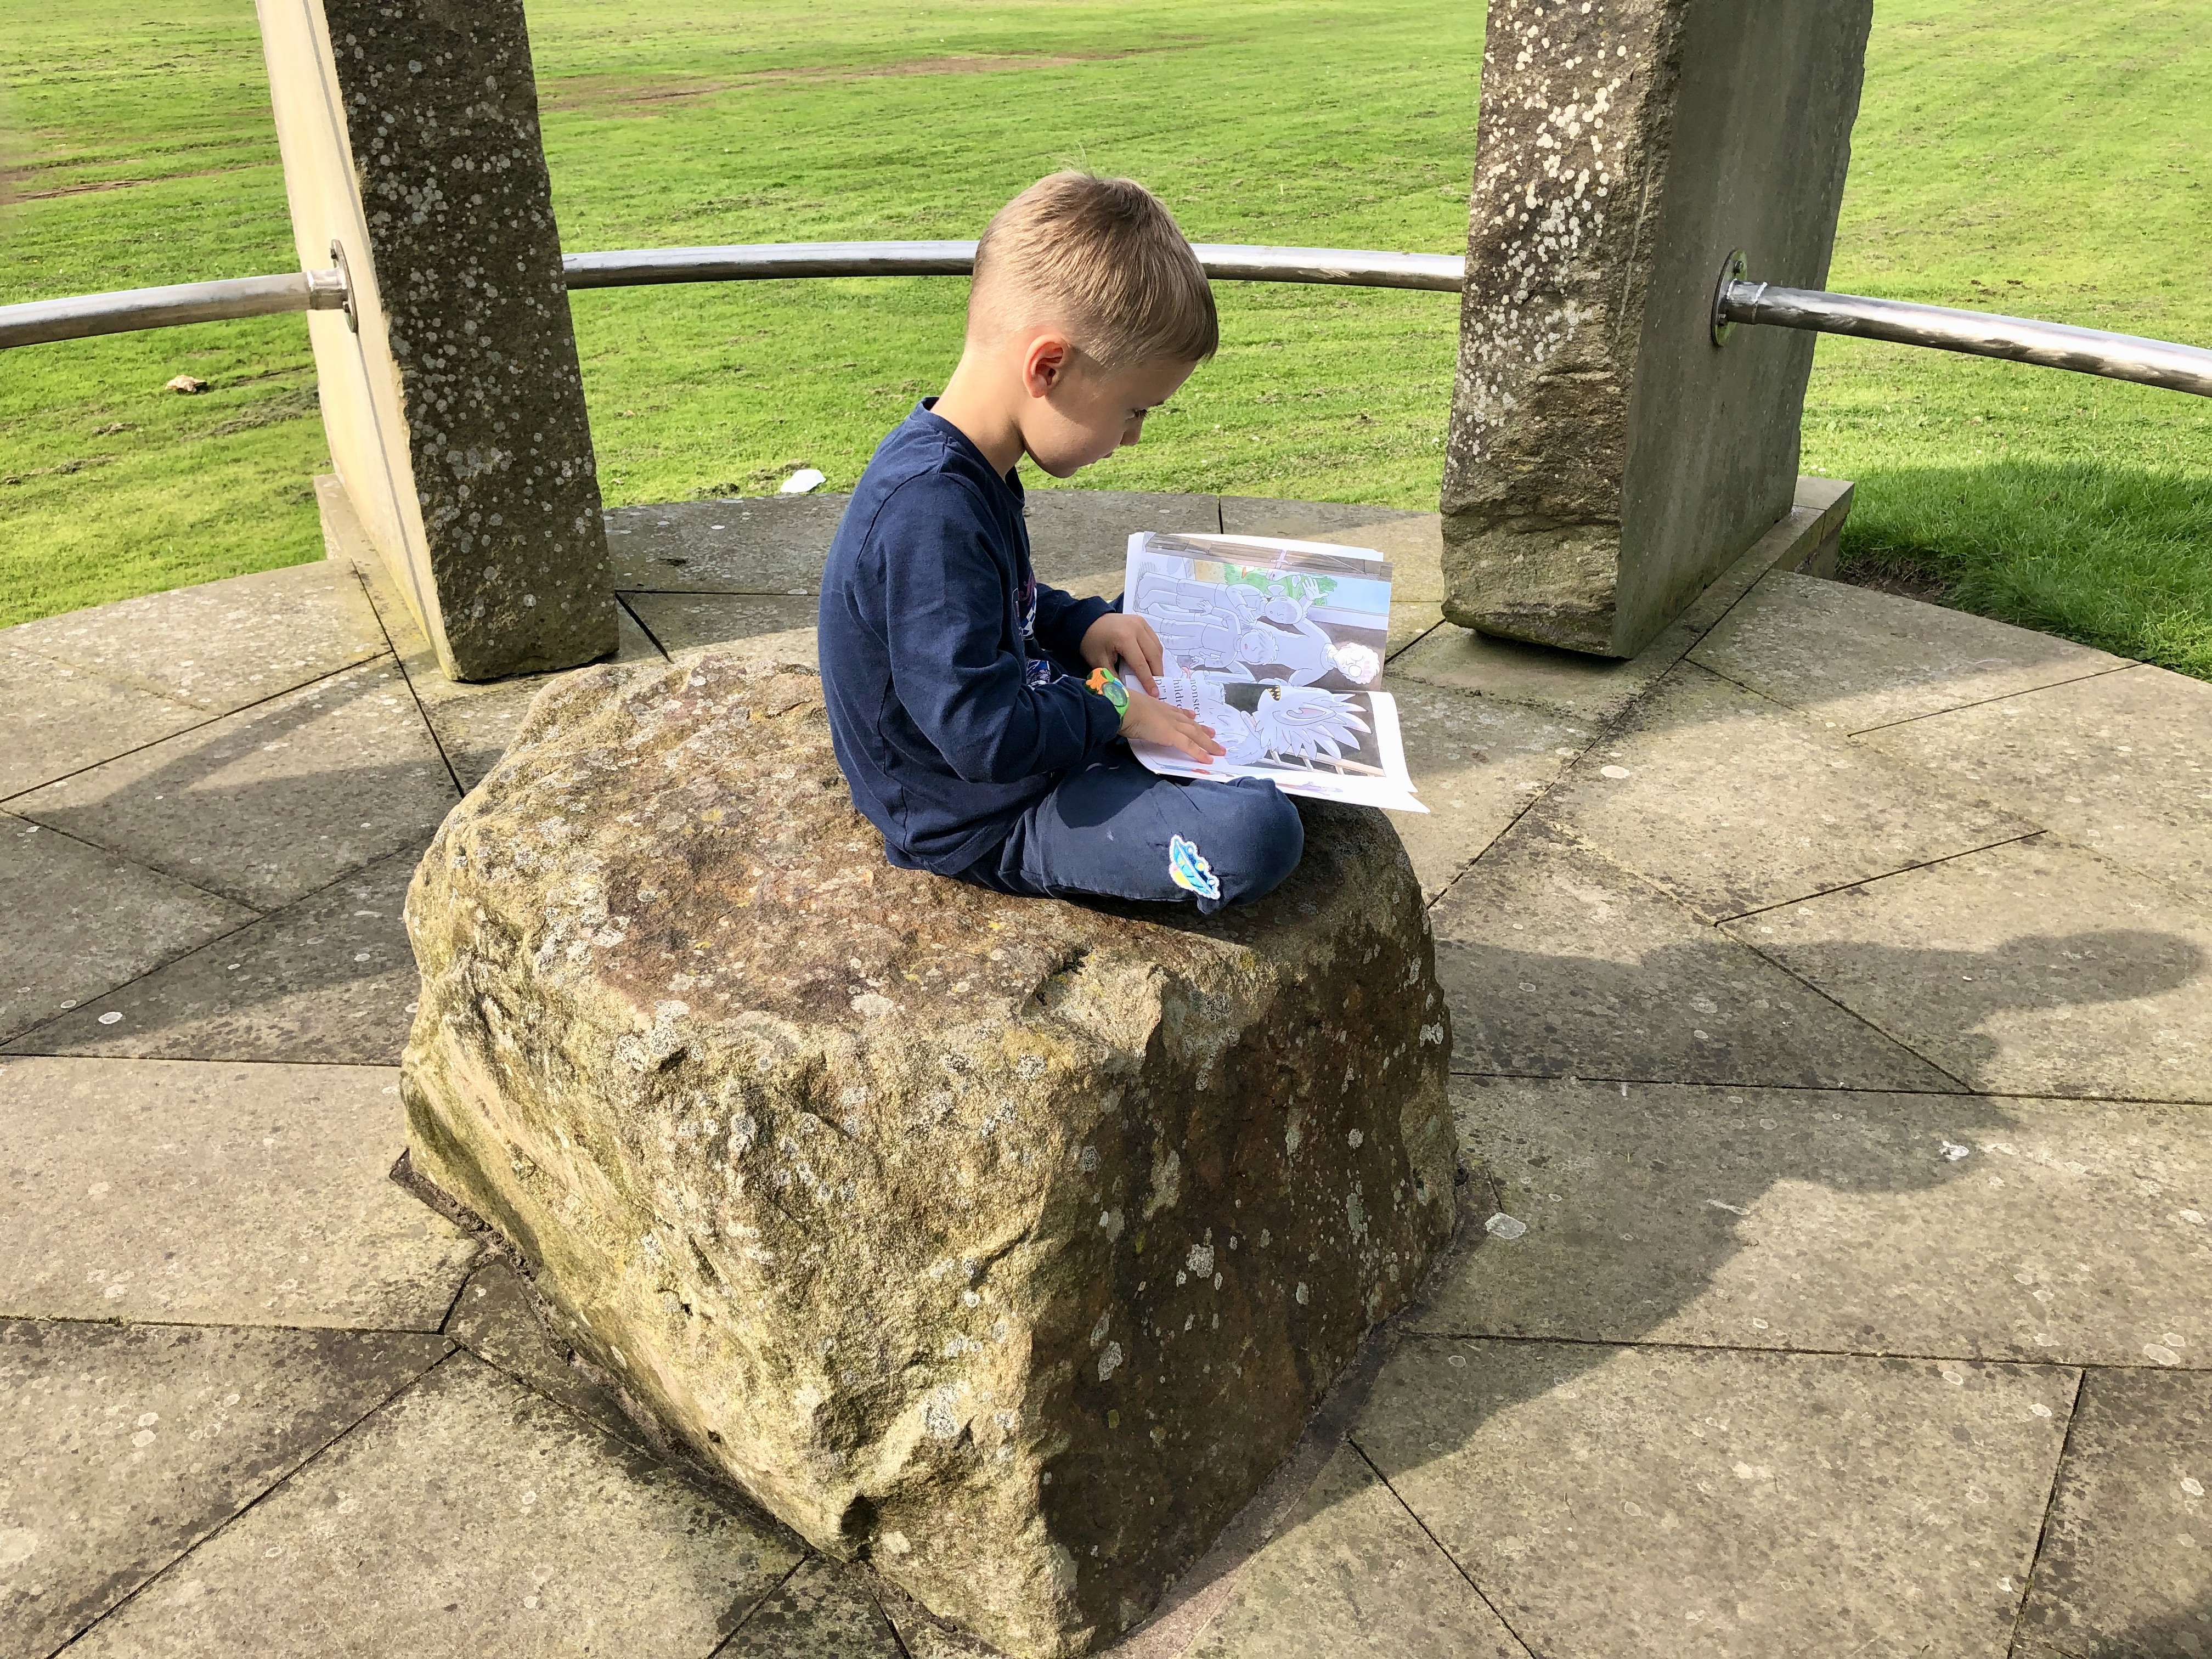 patrik reading a book on a rock